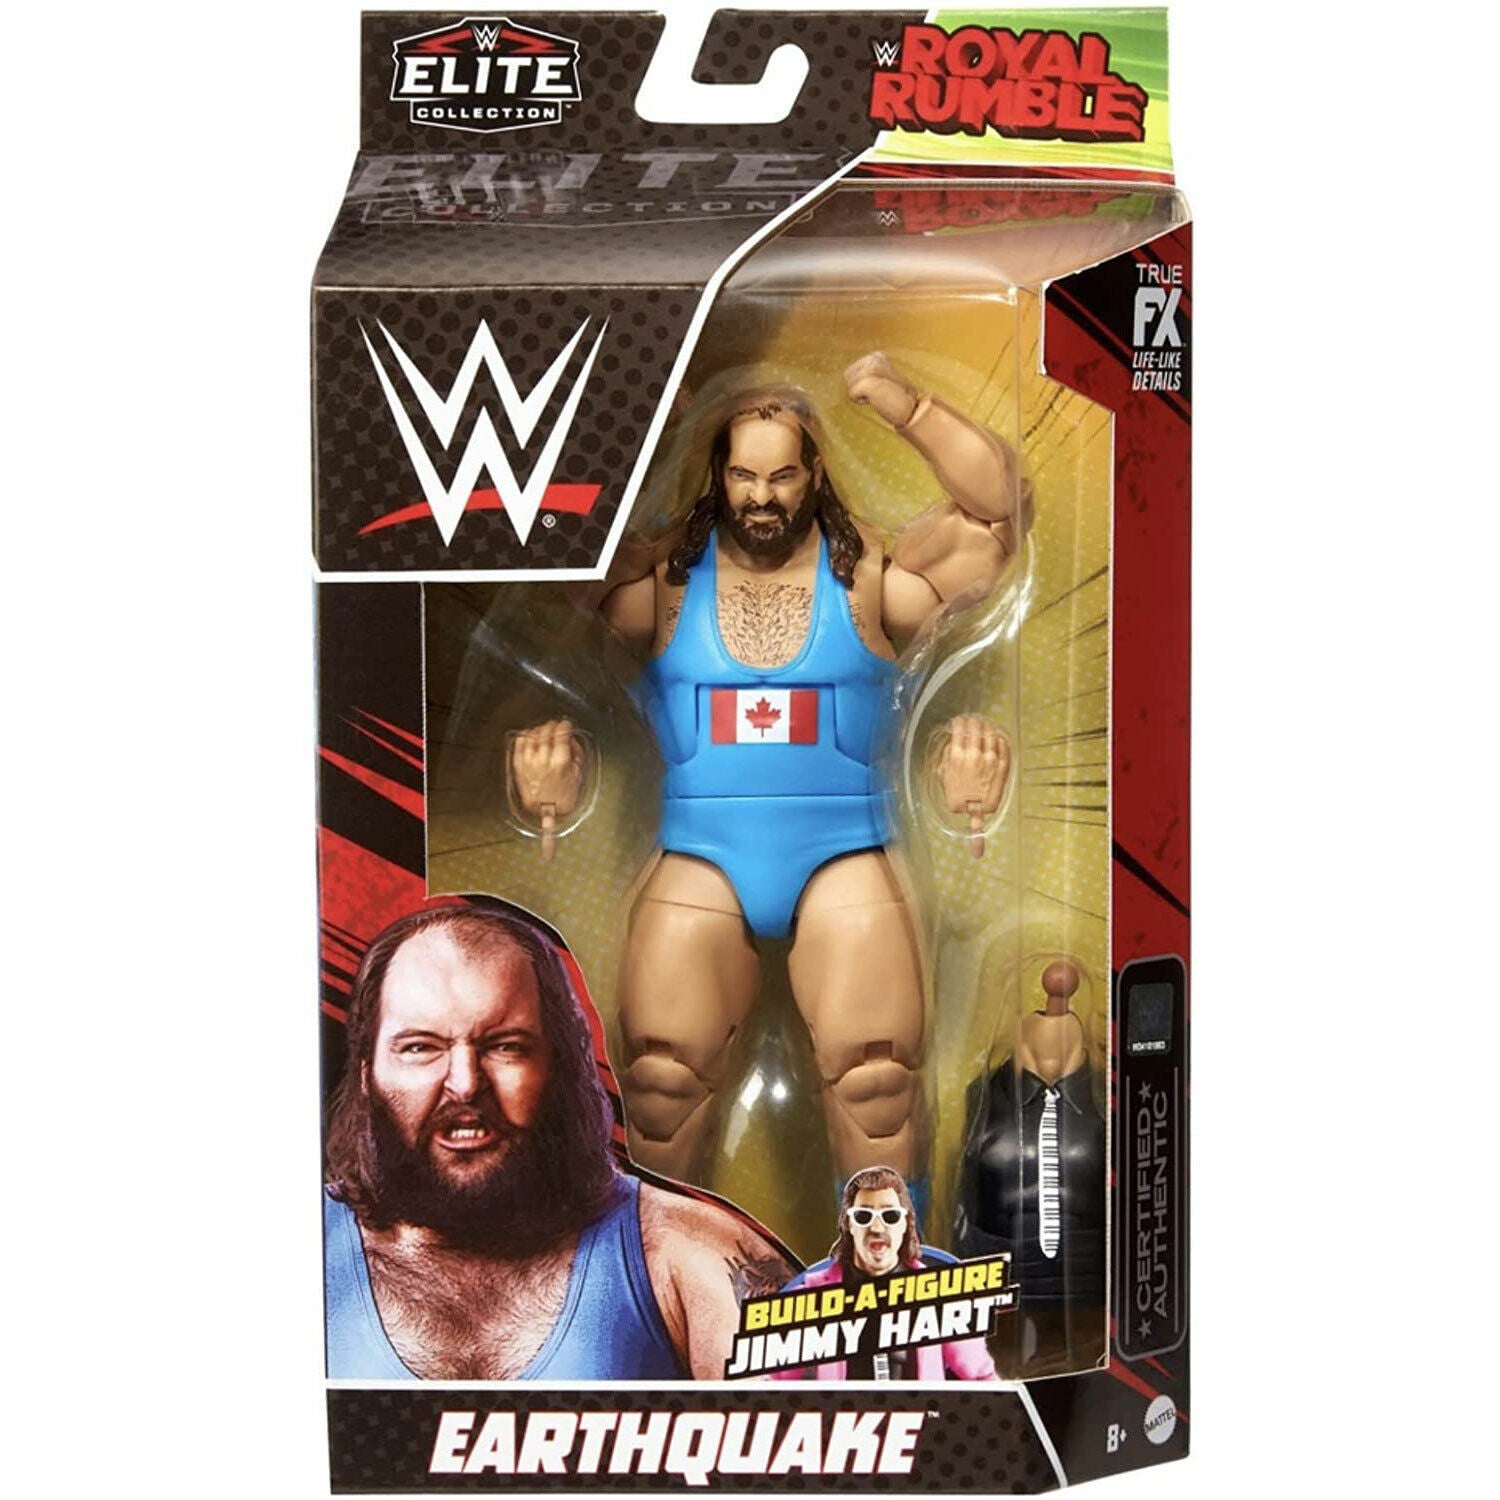 New WWE Elite Earthquake Action Figure - Royal Rumble Edition